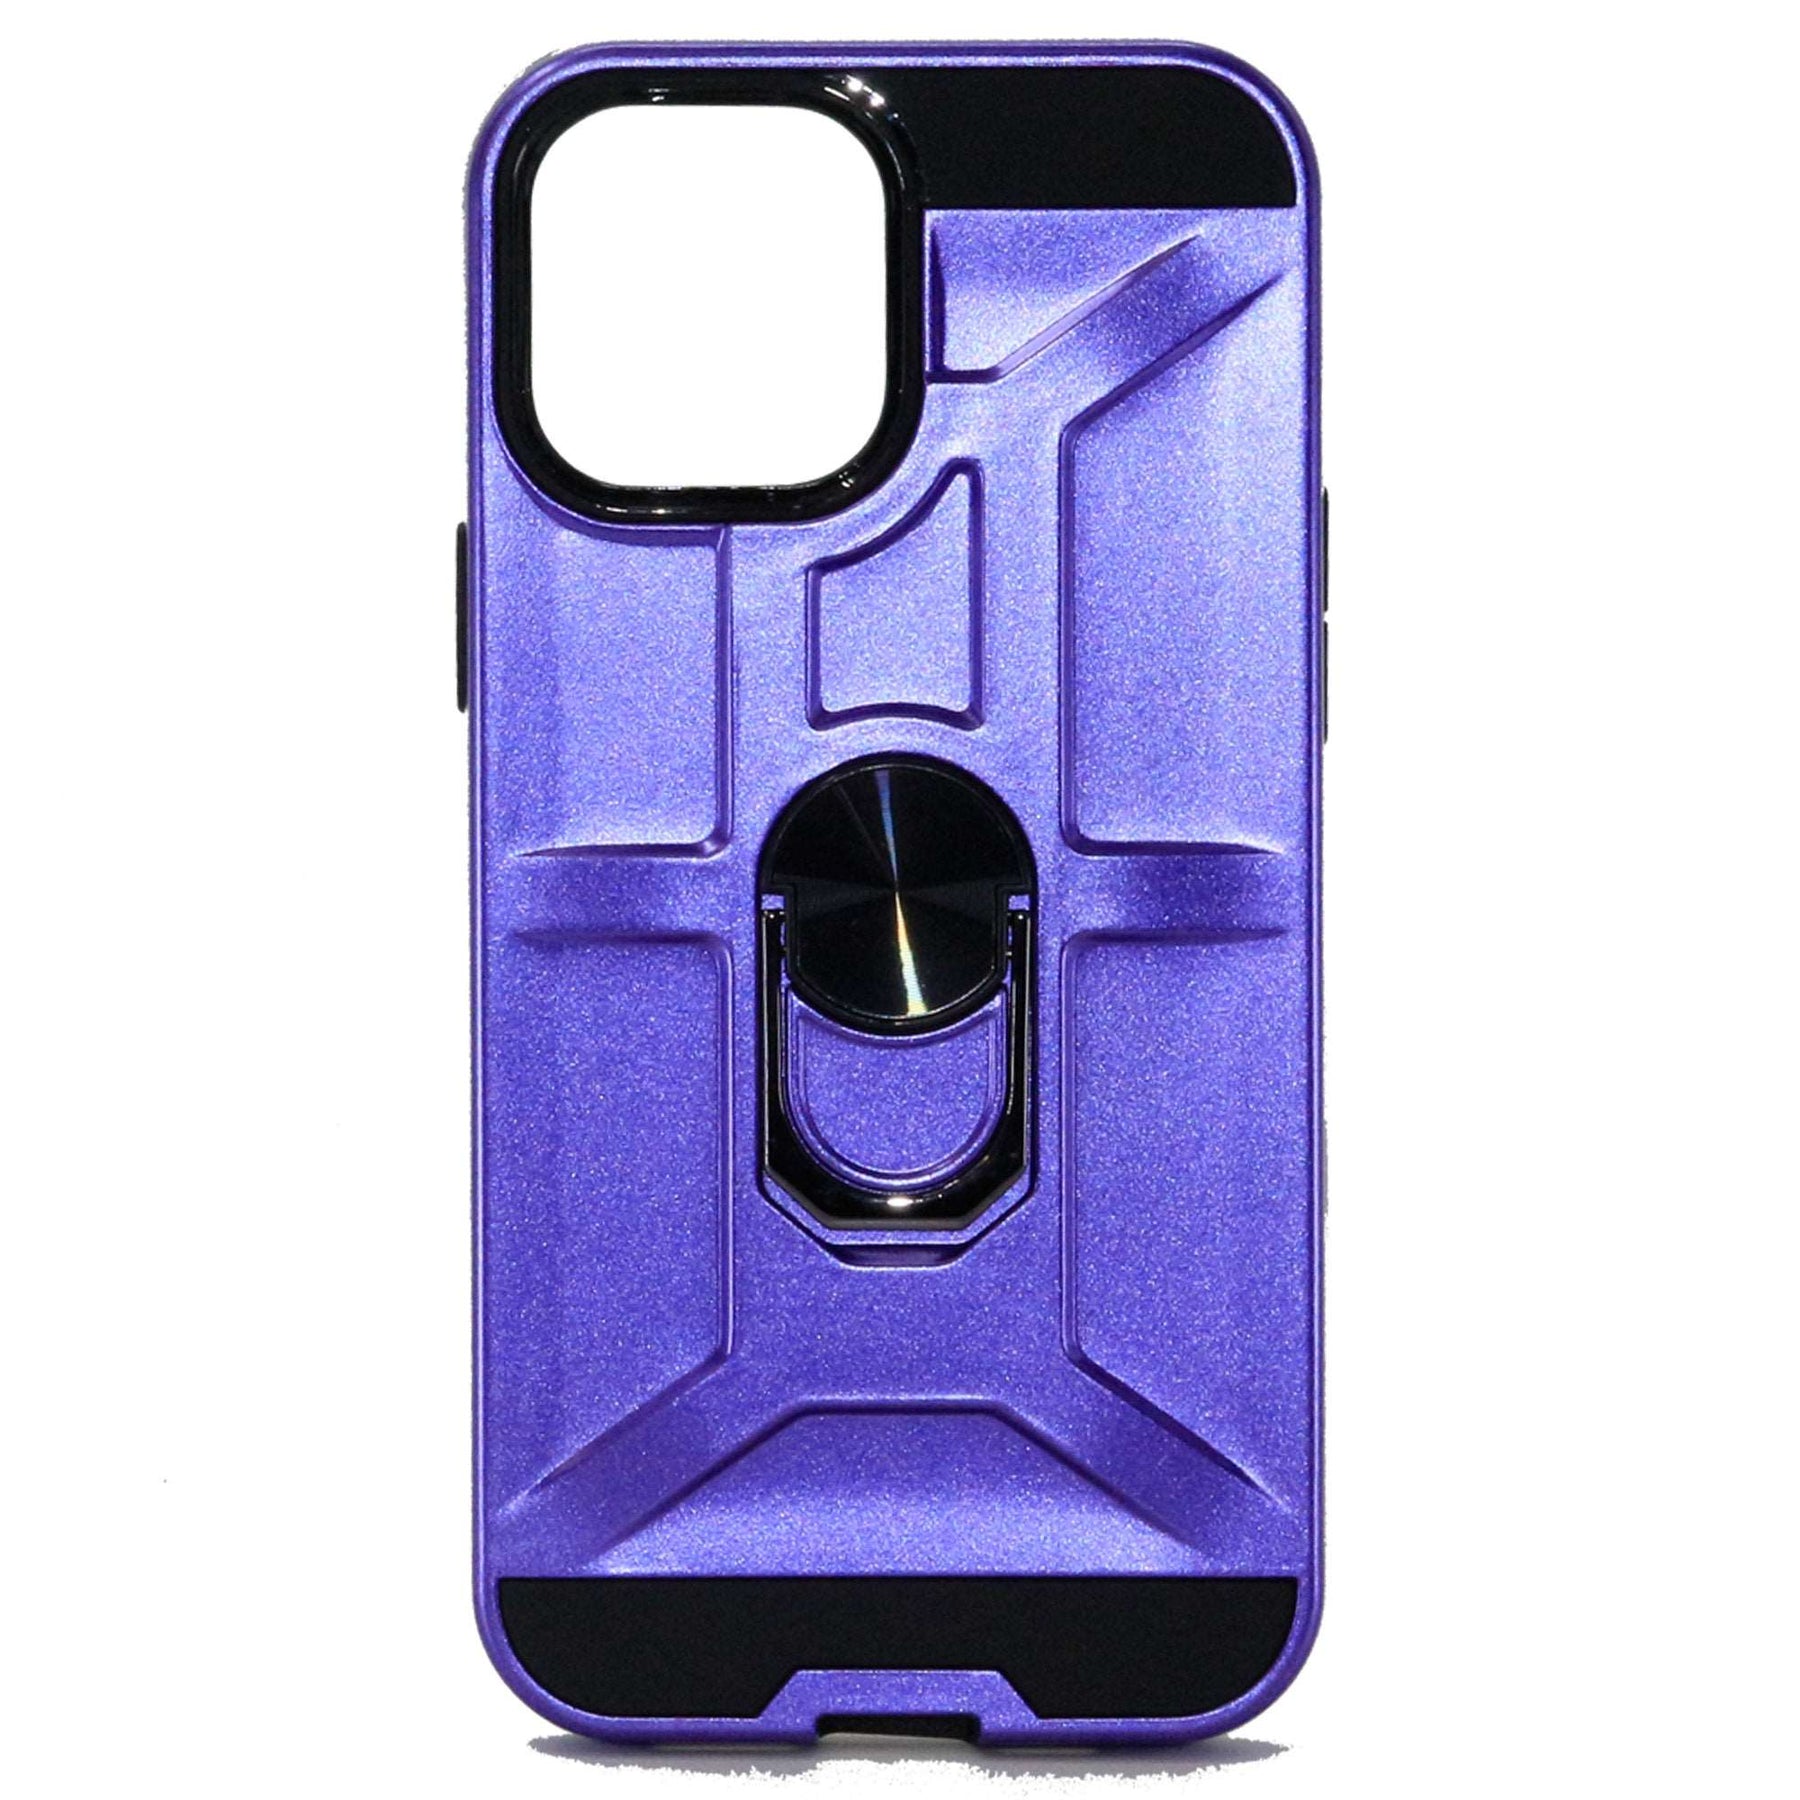 iPhone 12 pro max purple ring case